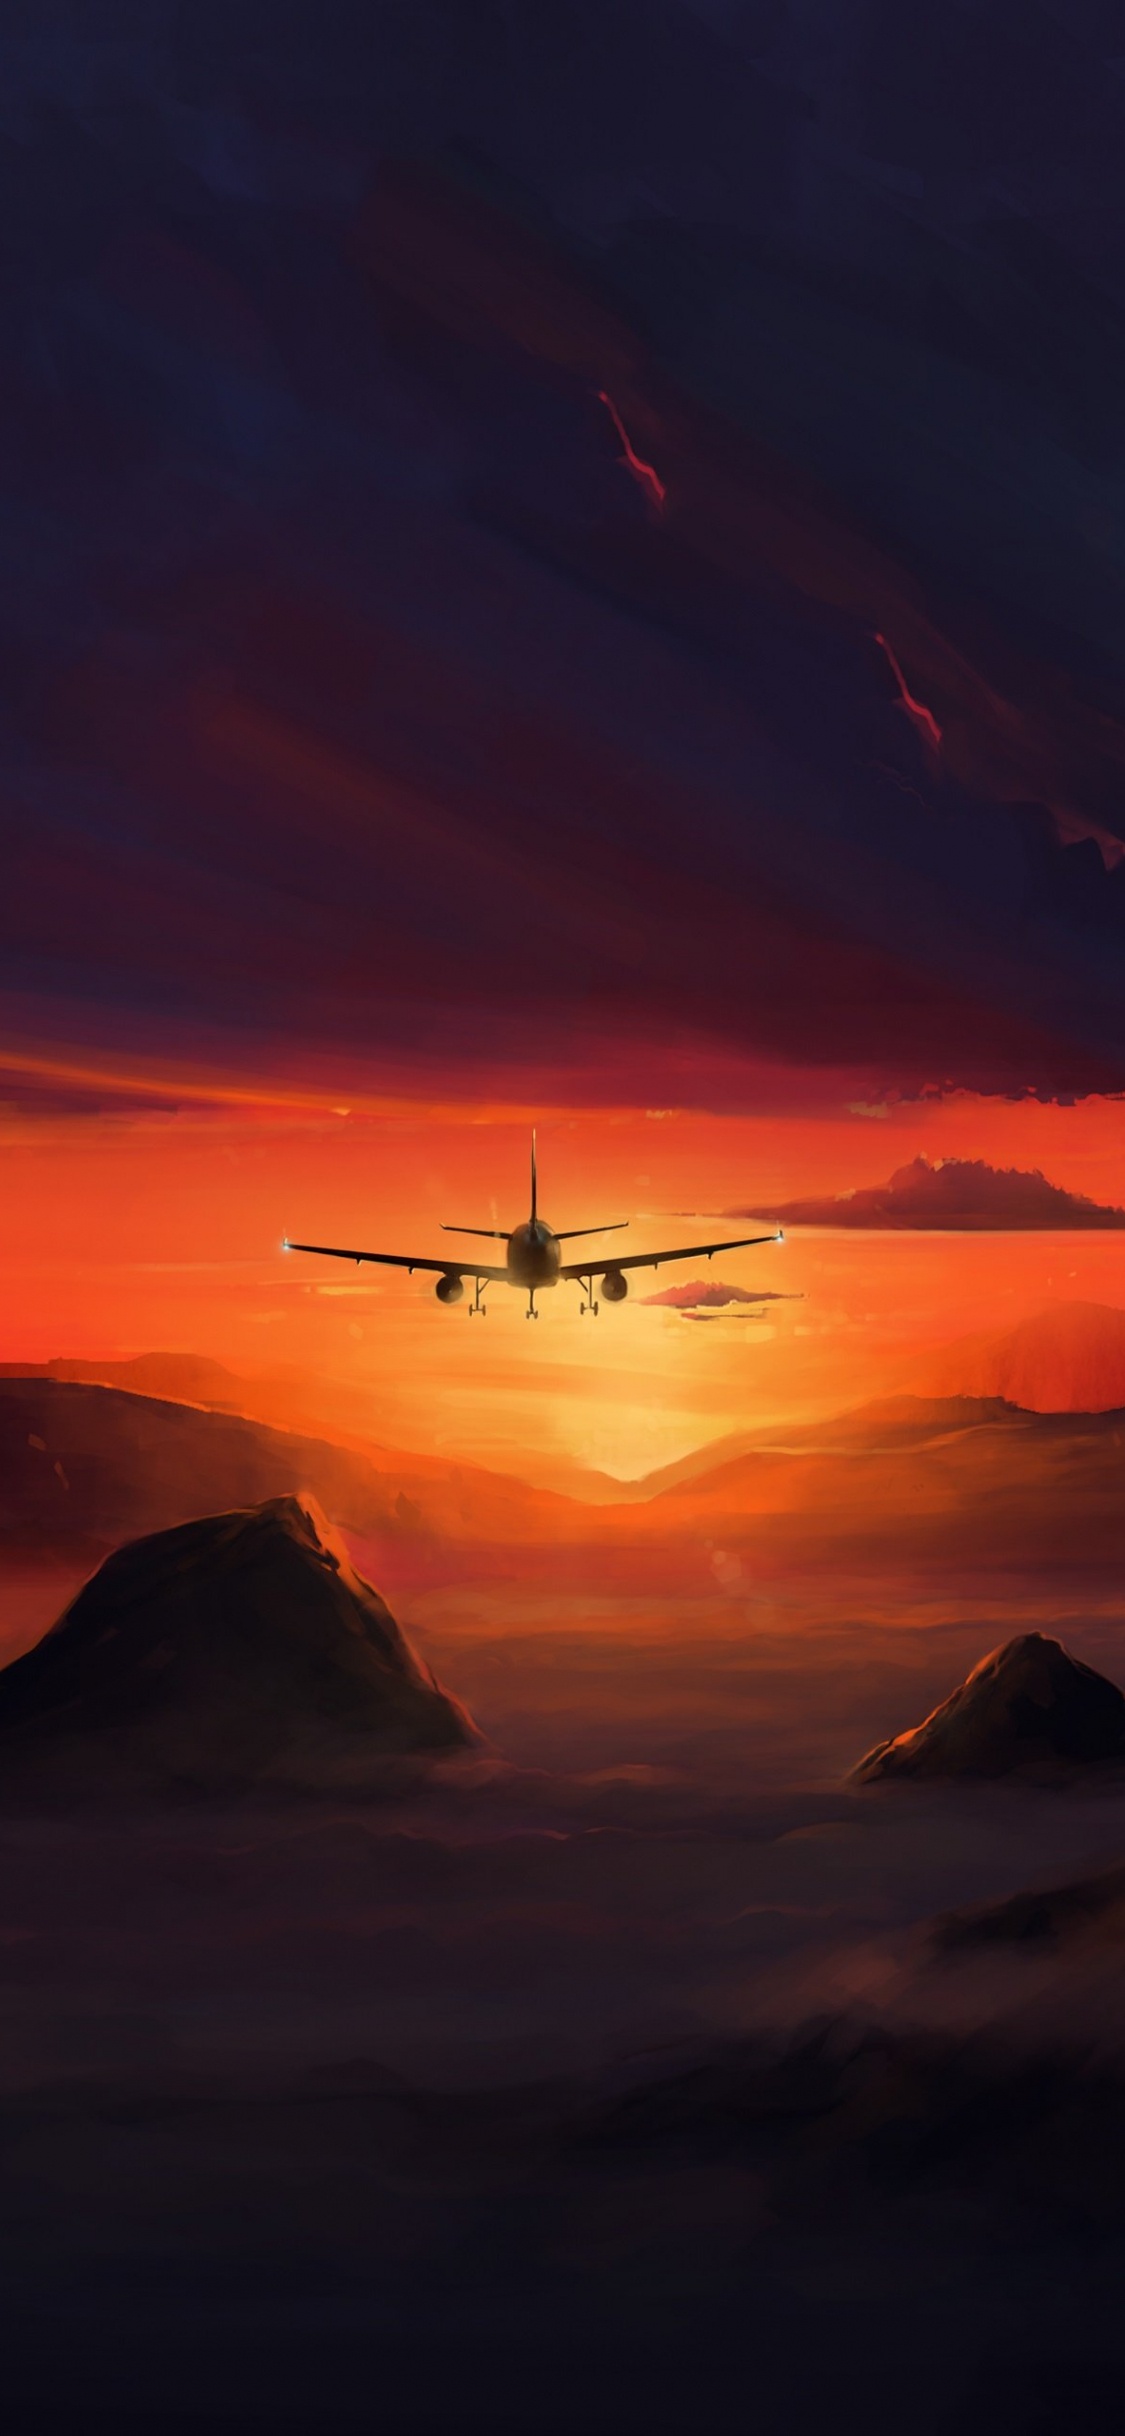 Wallpaper ID 449487  Vehicles Aircraft Phone Wallpaper Sky Cloud  Passenger Plane 720x1280 free download